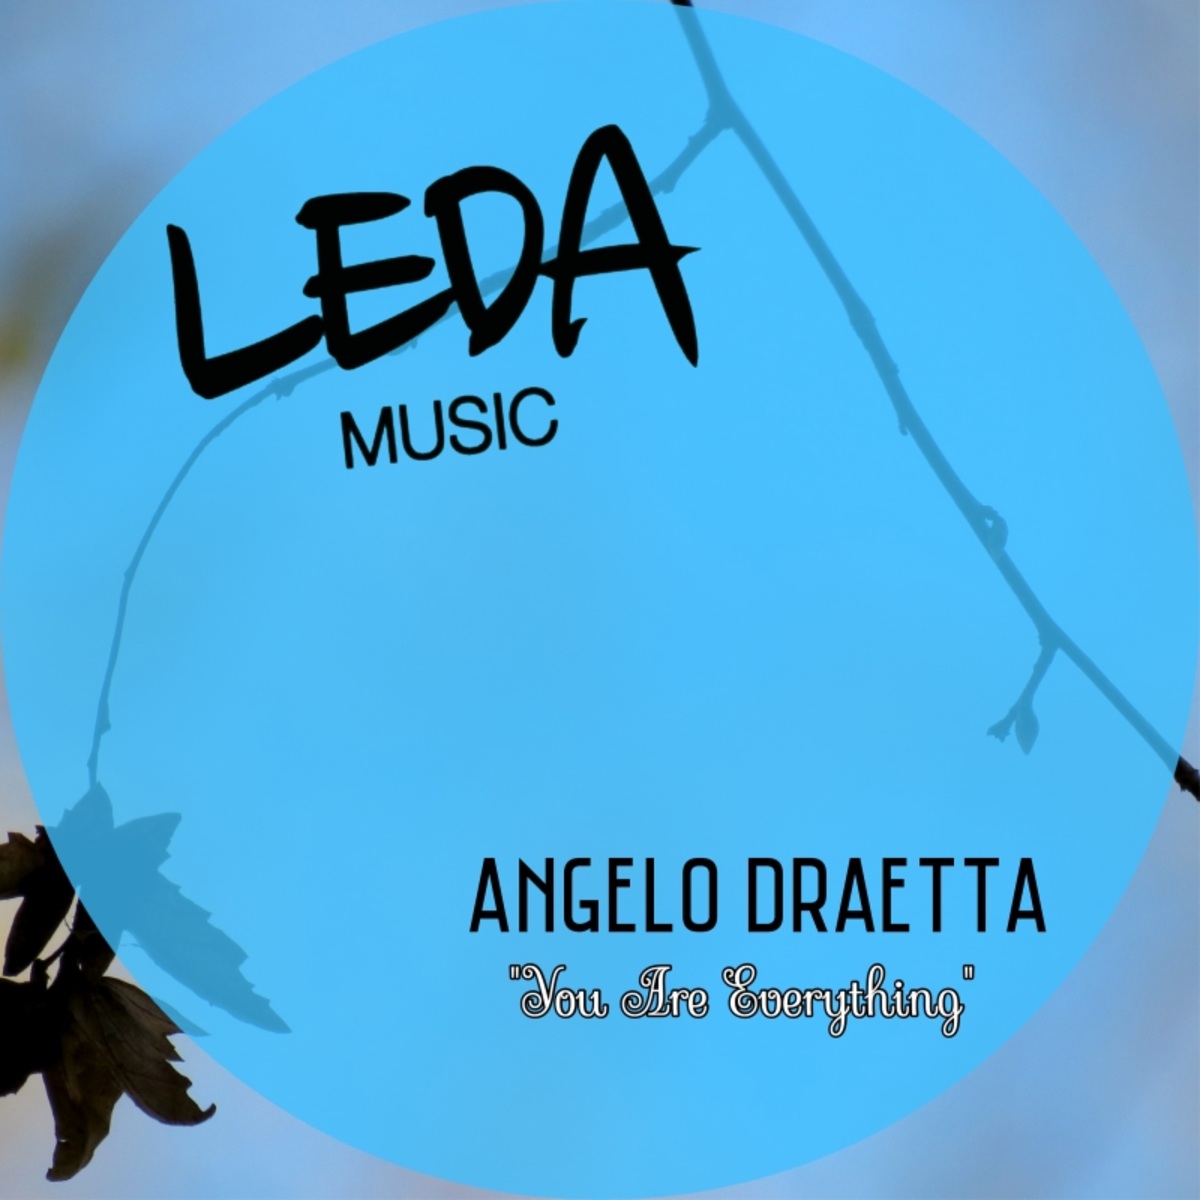 Angelo Draetta - You Are Everything / Leda Music